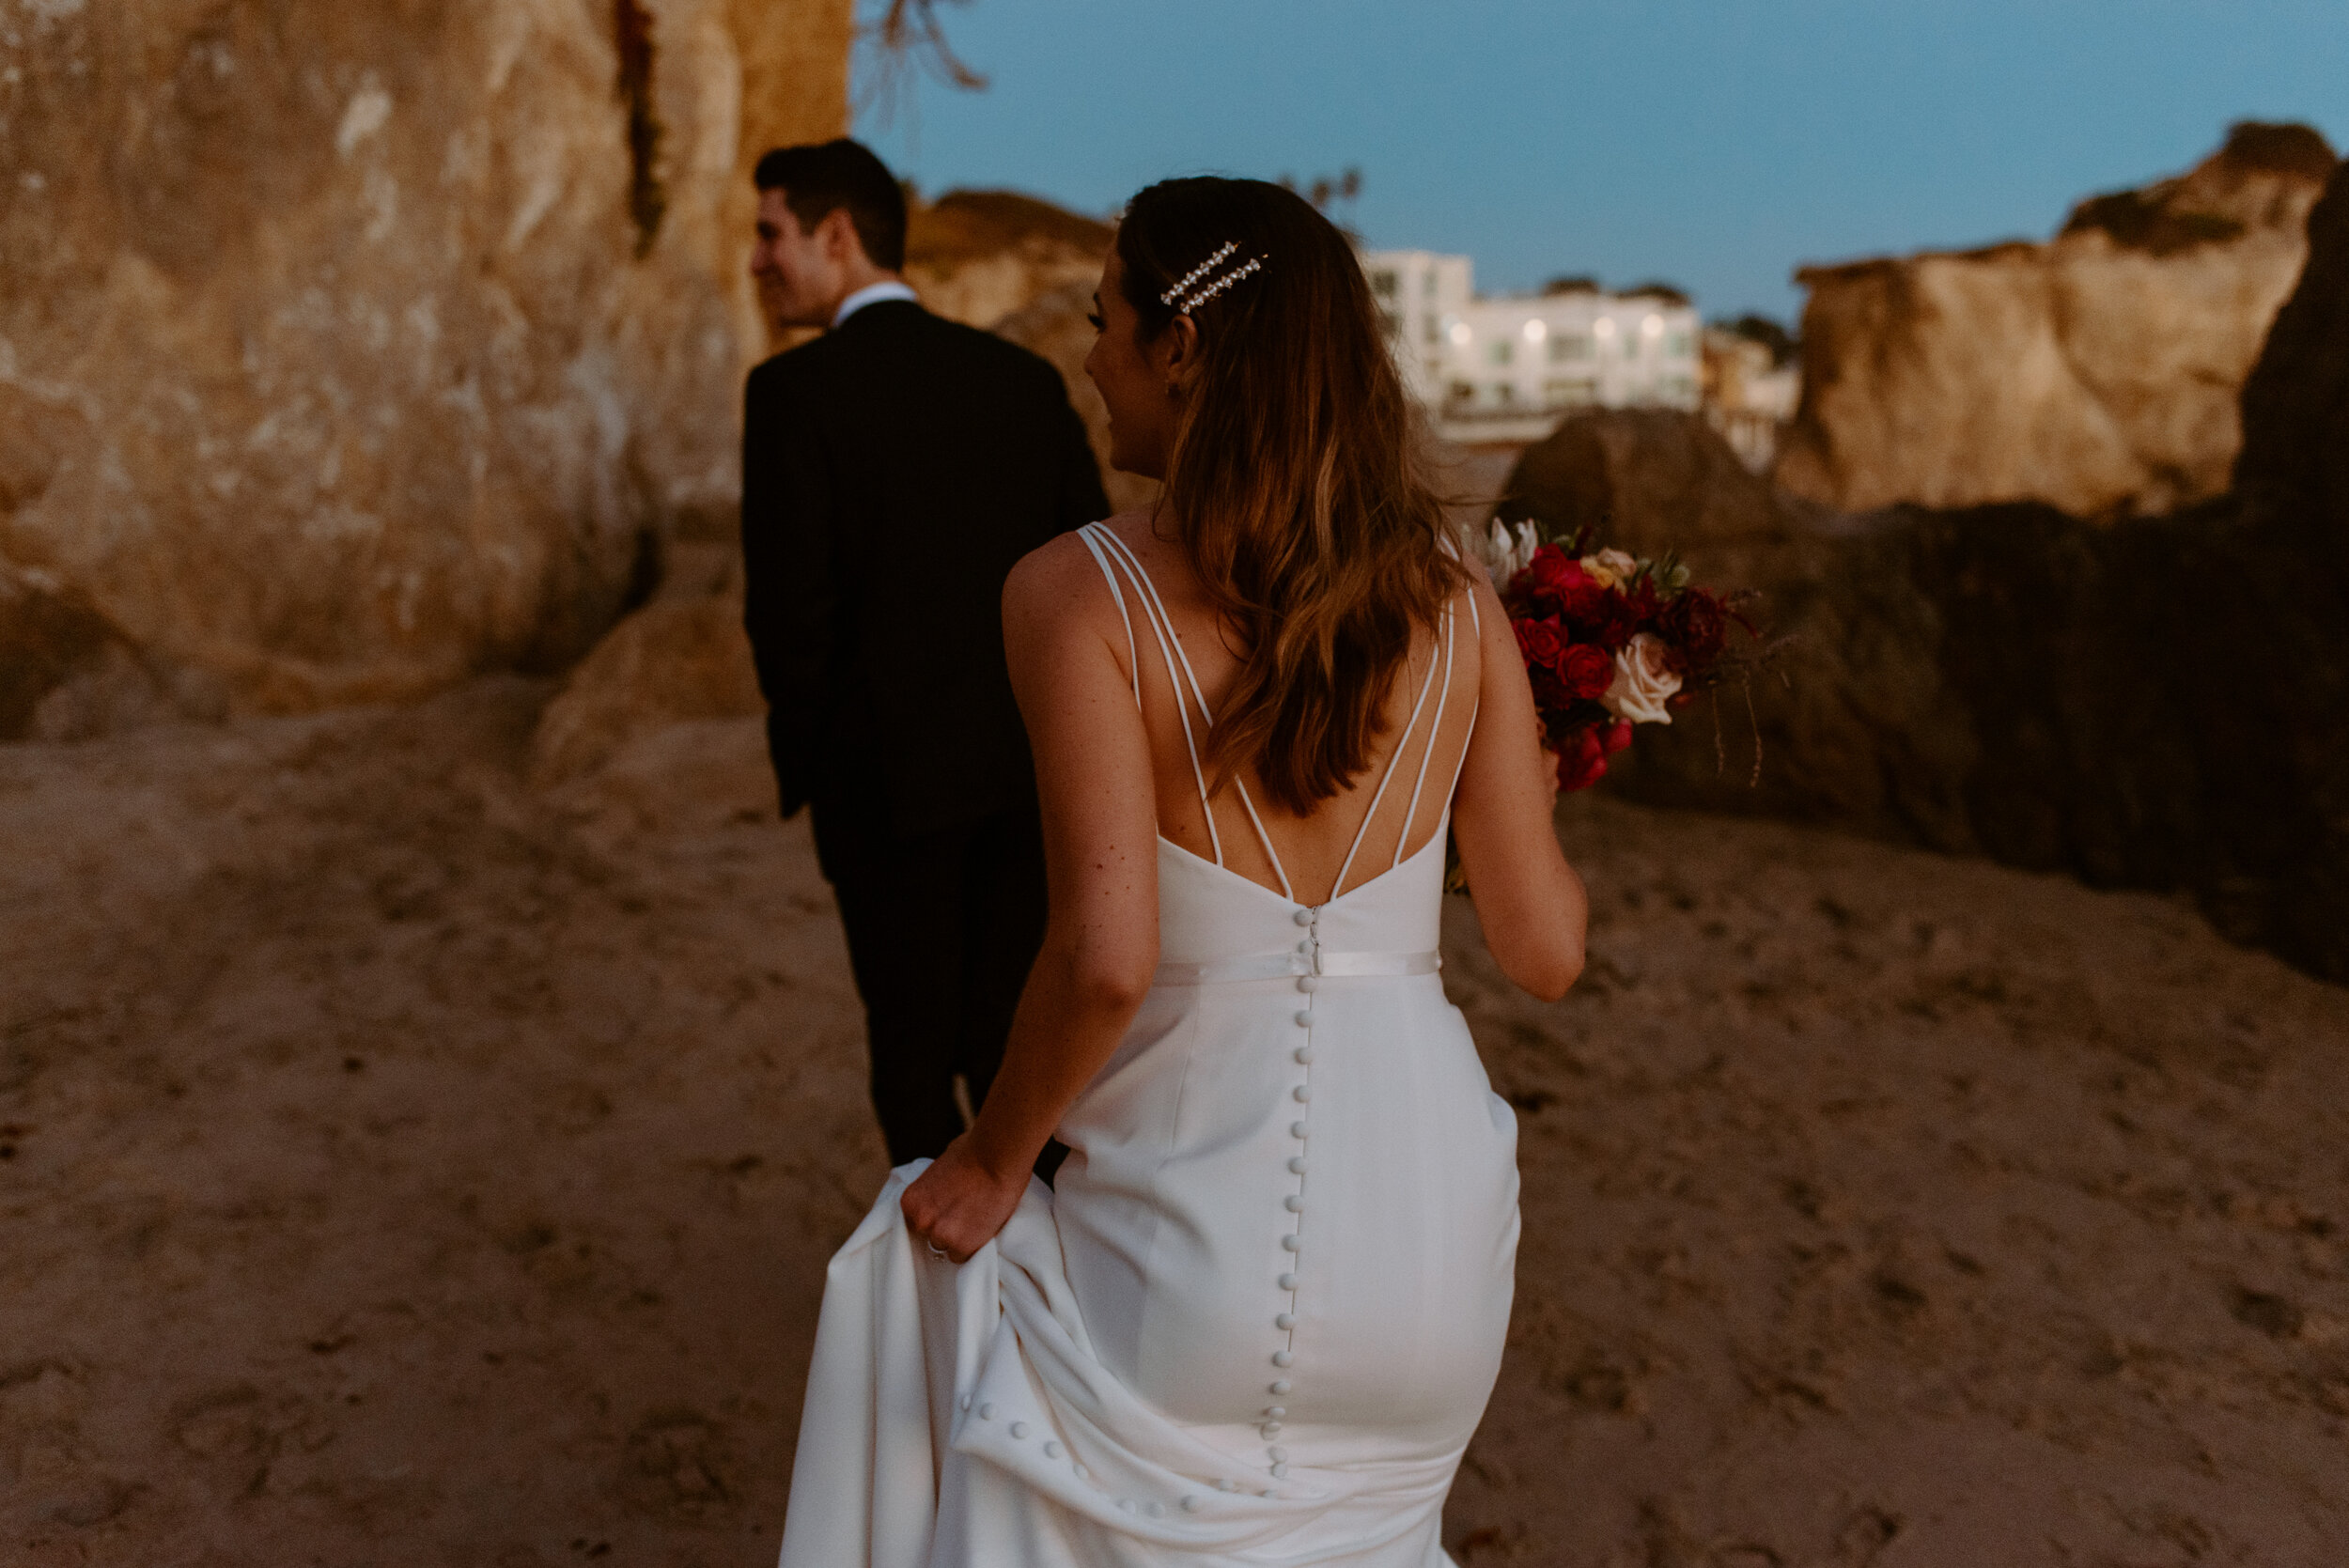  Malibu Airbnb Elopement | El Matador Beach wedding | Point Dume Malibu Bride and Groom portraits | California Coast | California Elopement photographer 